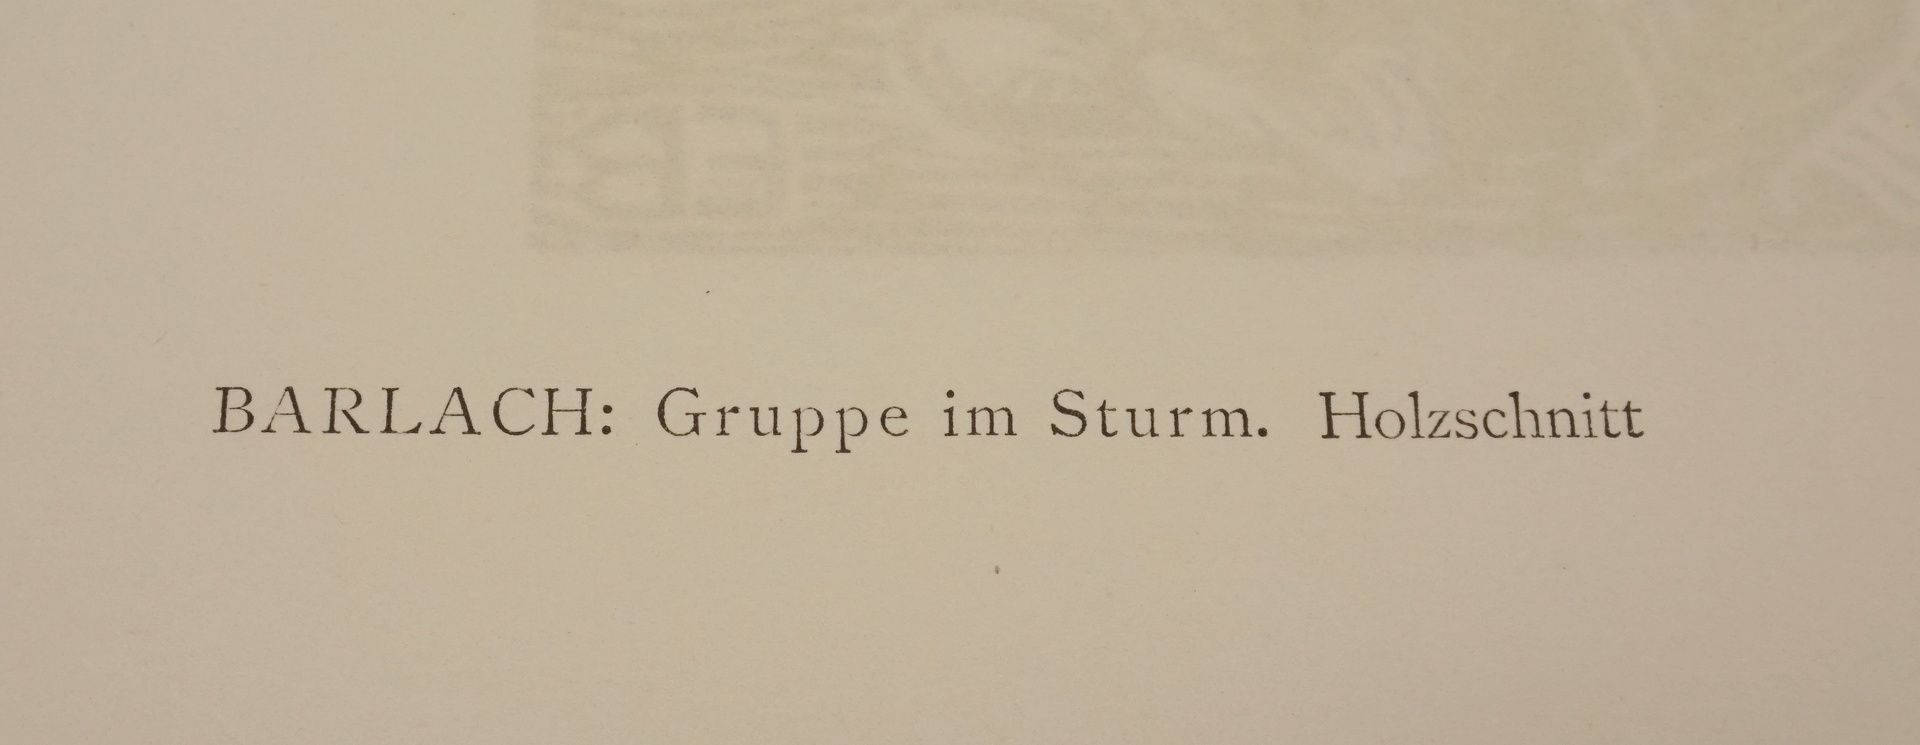 Ernst Barlach, "Gruppe im Sturm"(1870 Wedel - 1938 Rostock), Holzschnitt/Velin, unten rechts im - Image 5 of 5